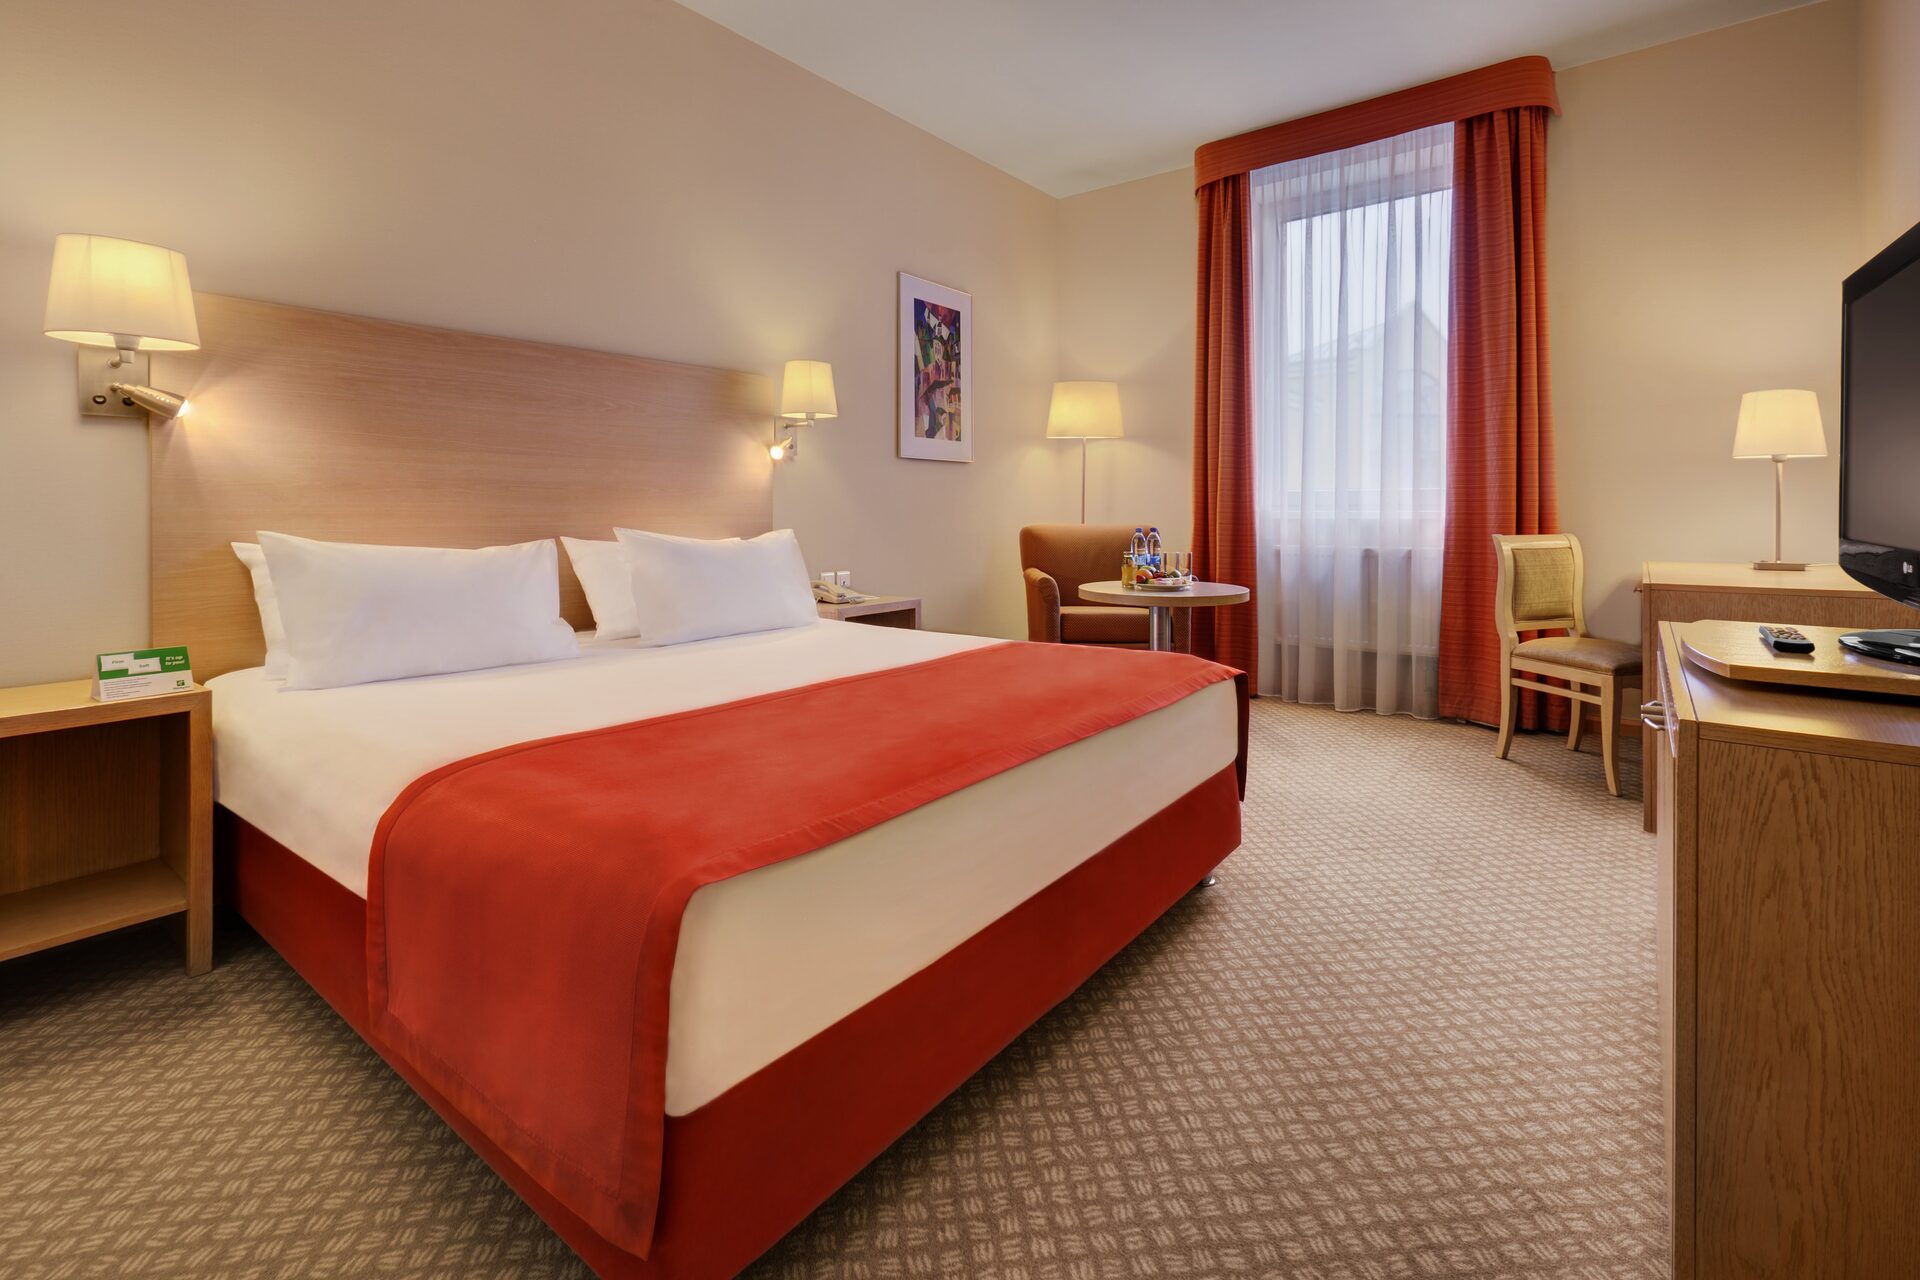 Holiday Inn Lesnaya Hotel: Room DOUBLE SINGLE USE STANDARD